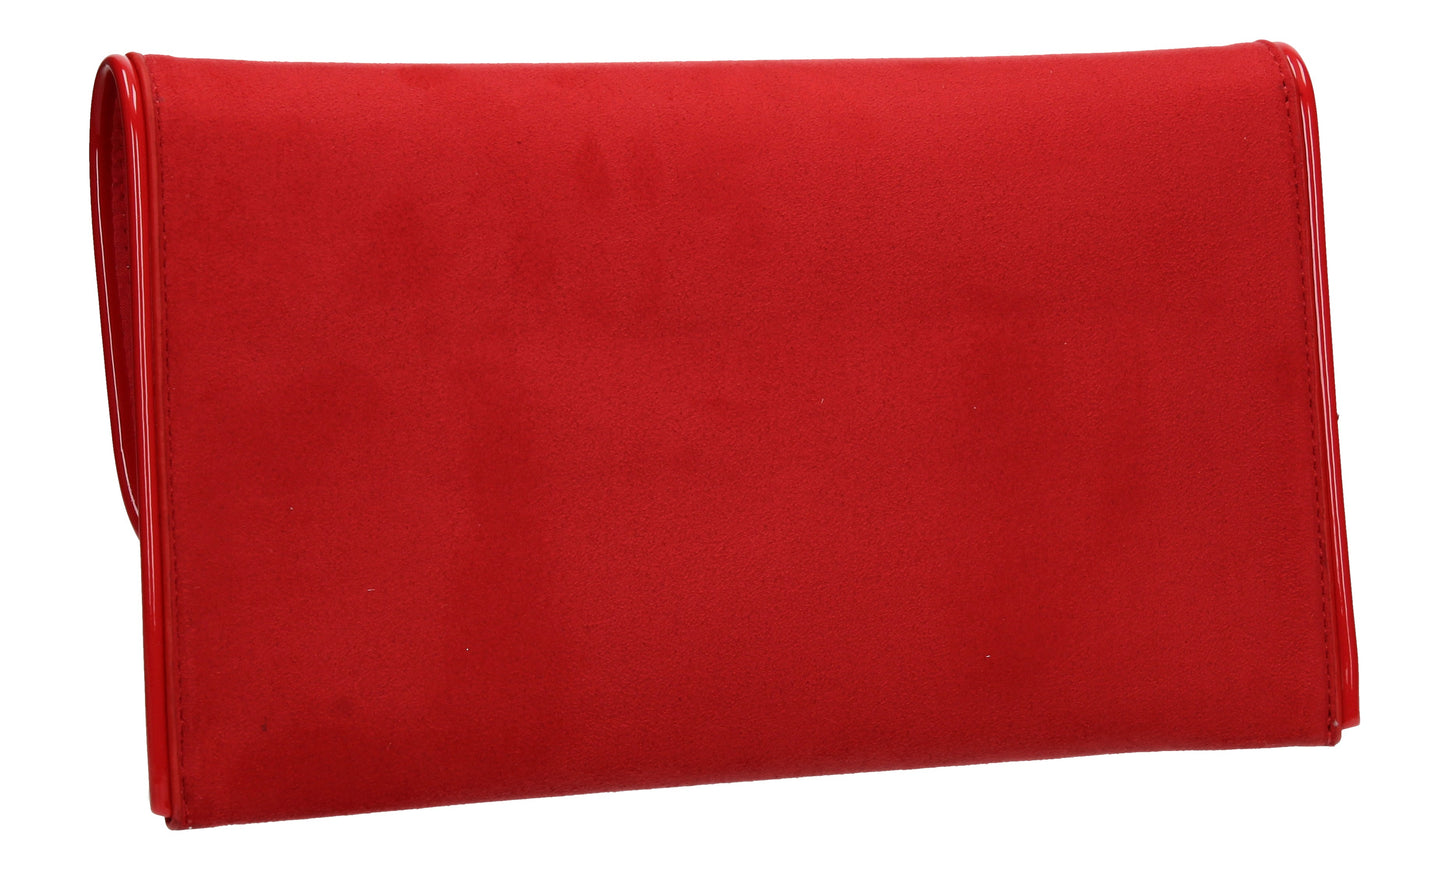 SWANKYSWANS Kora Clutch Bag Red Cute Cheap Clutch Bag For Weddings School and Work